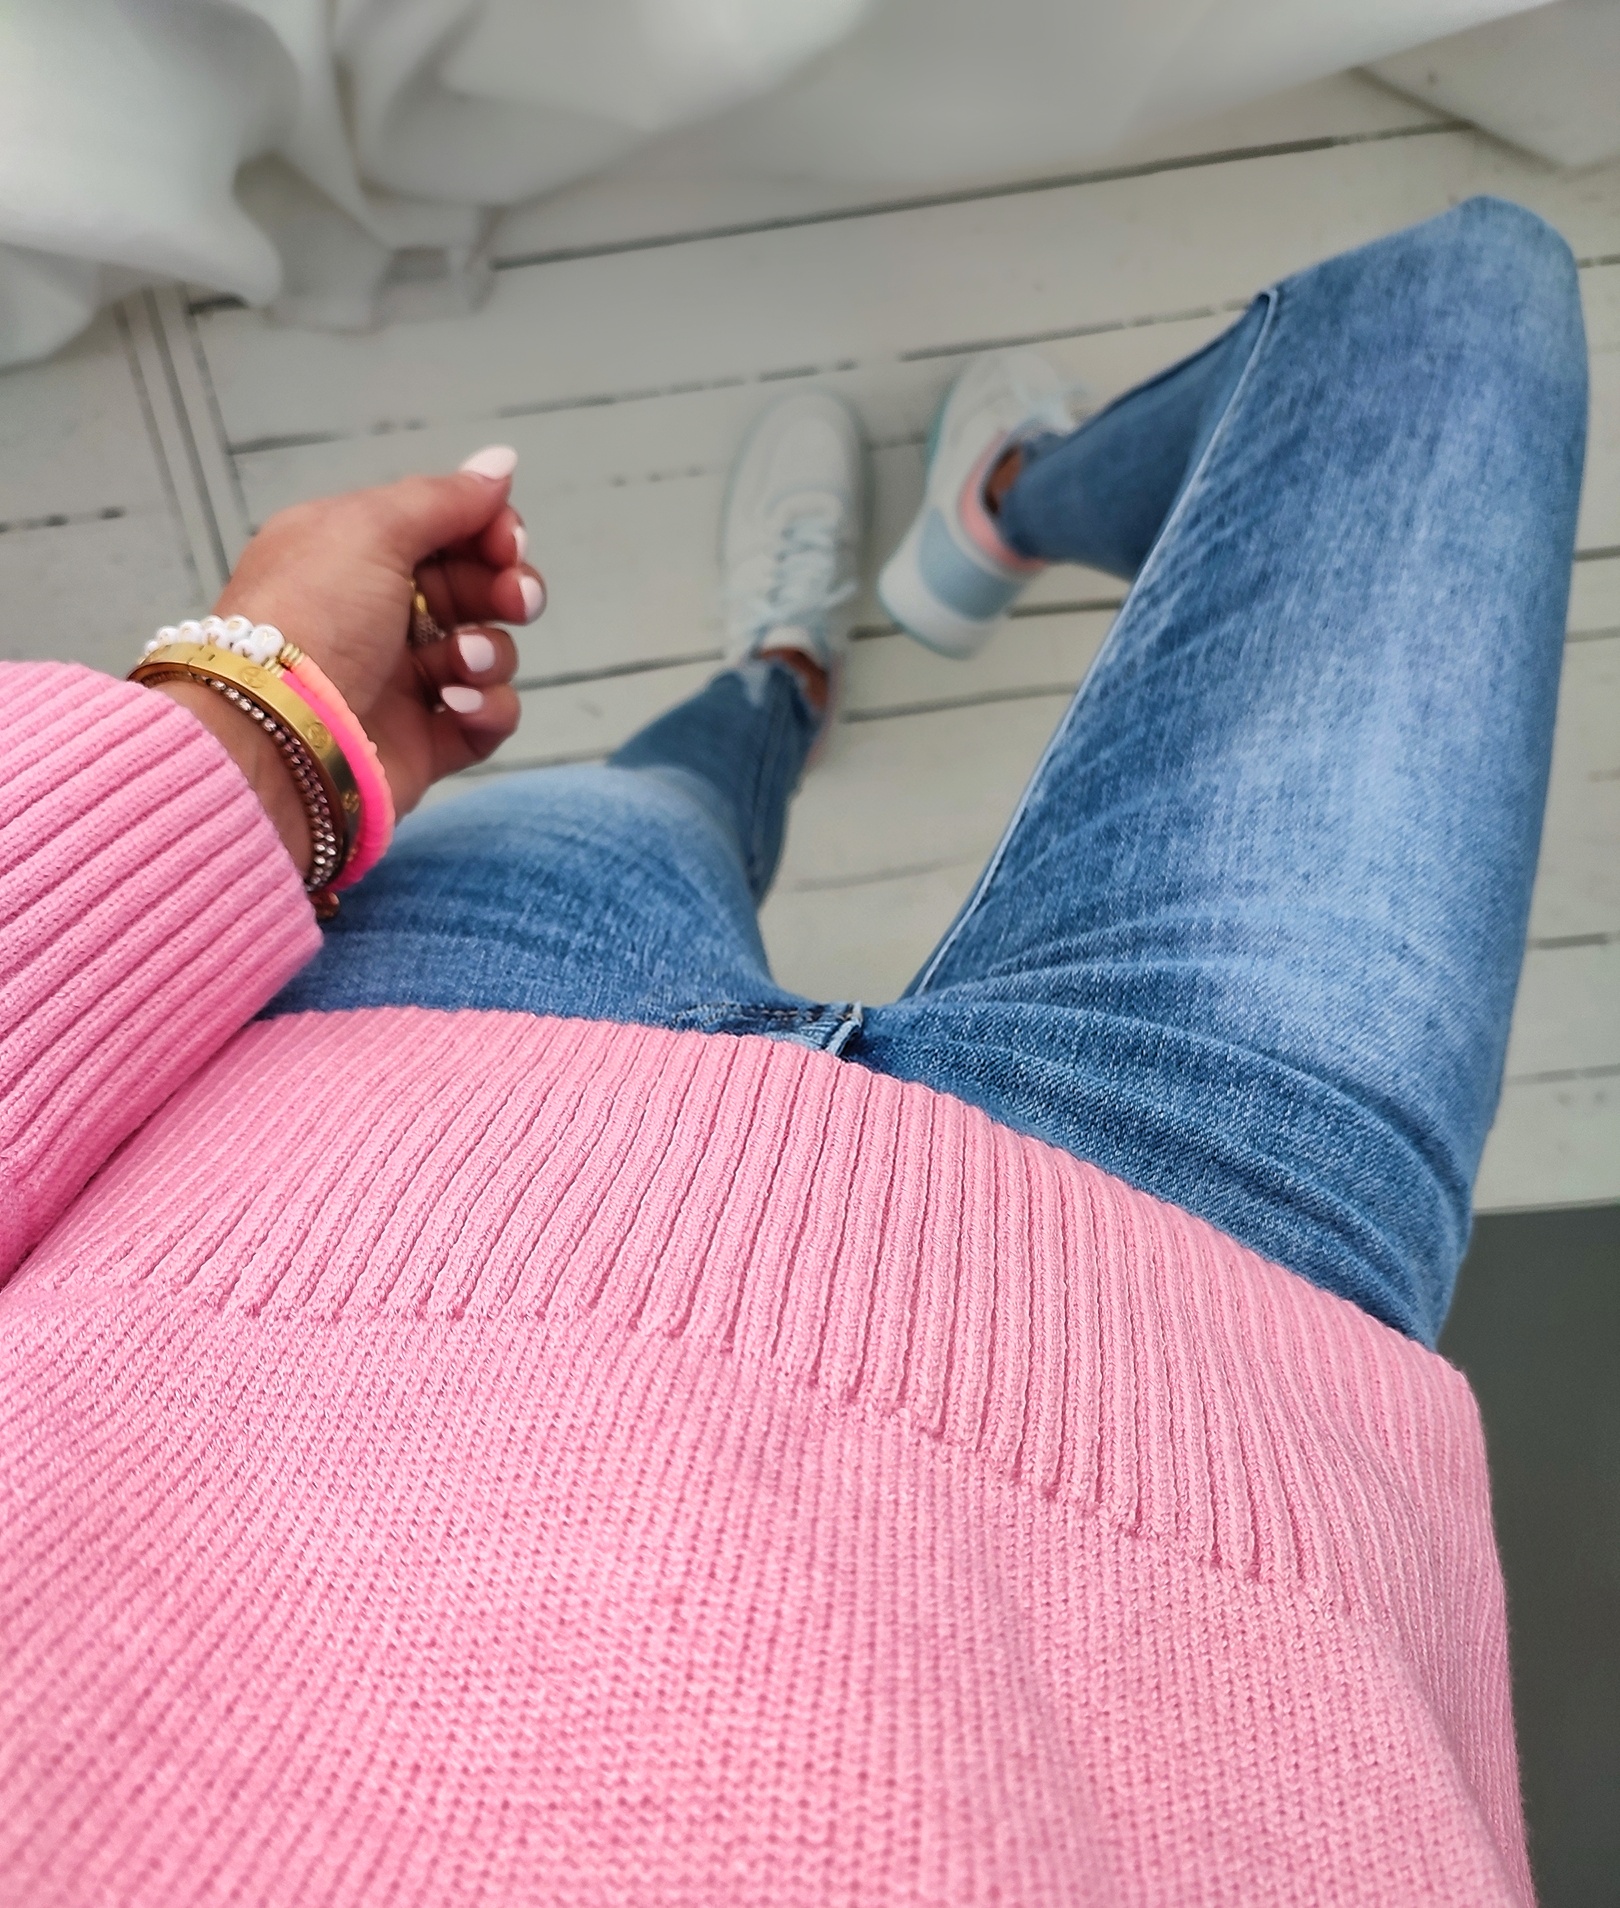 Skinny Jeans Emilia – dunkelblau light destroyed